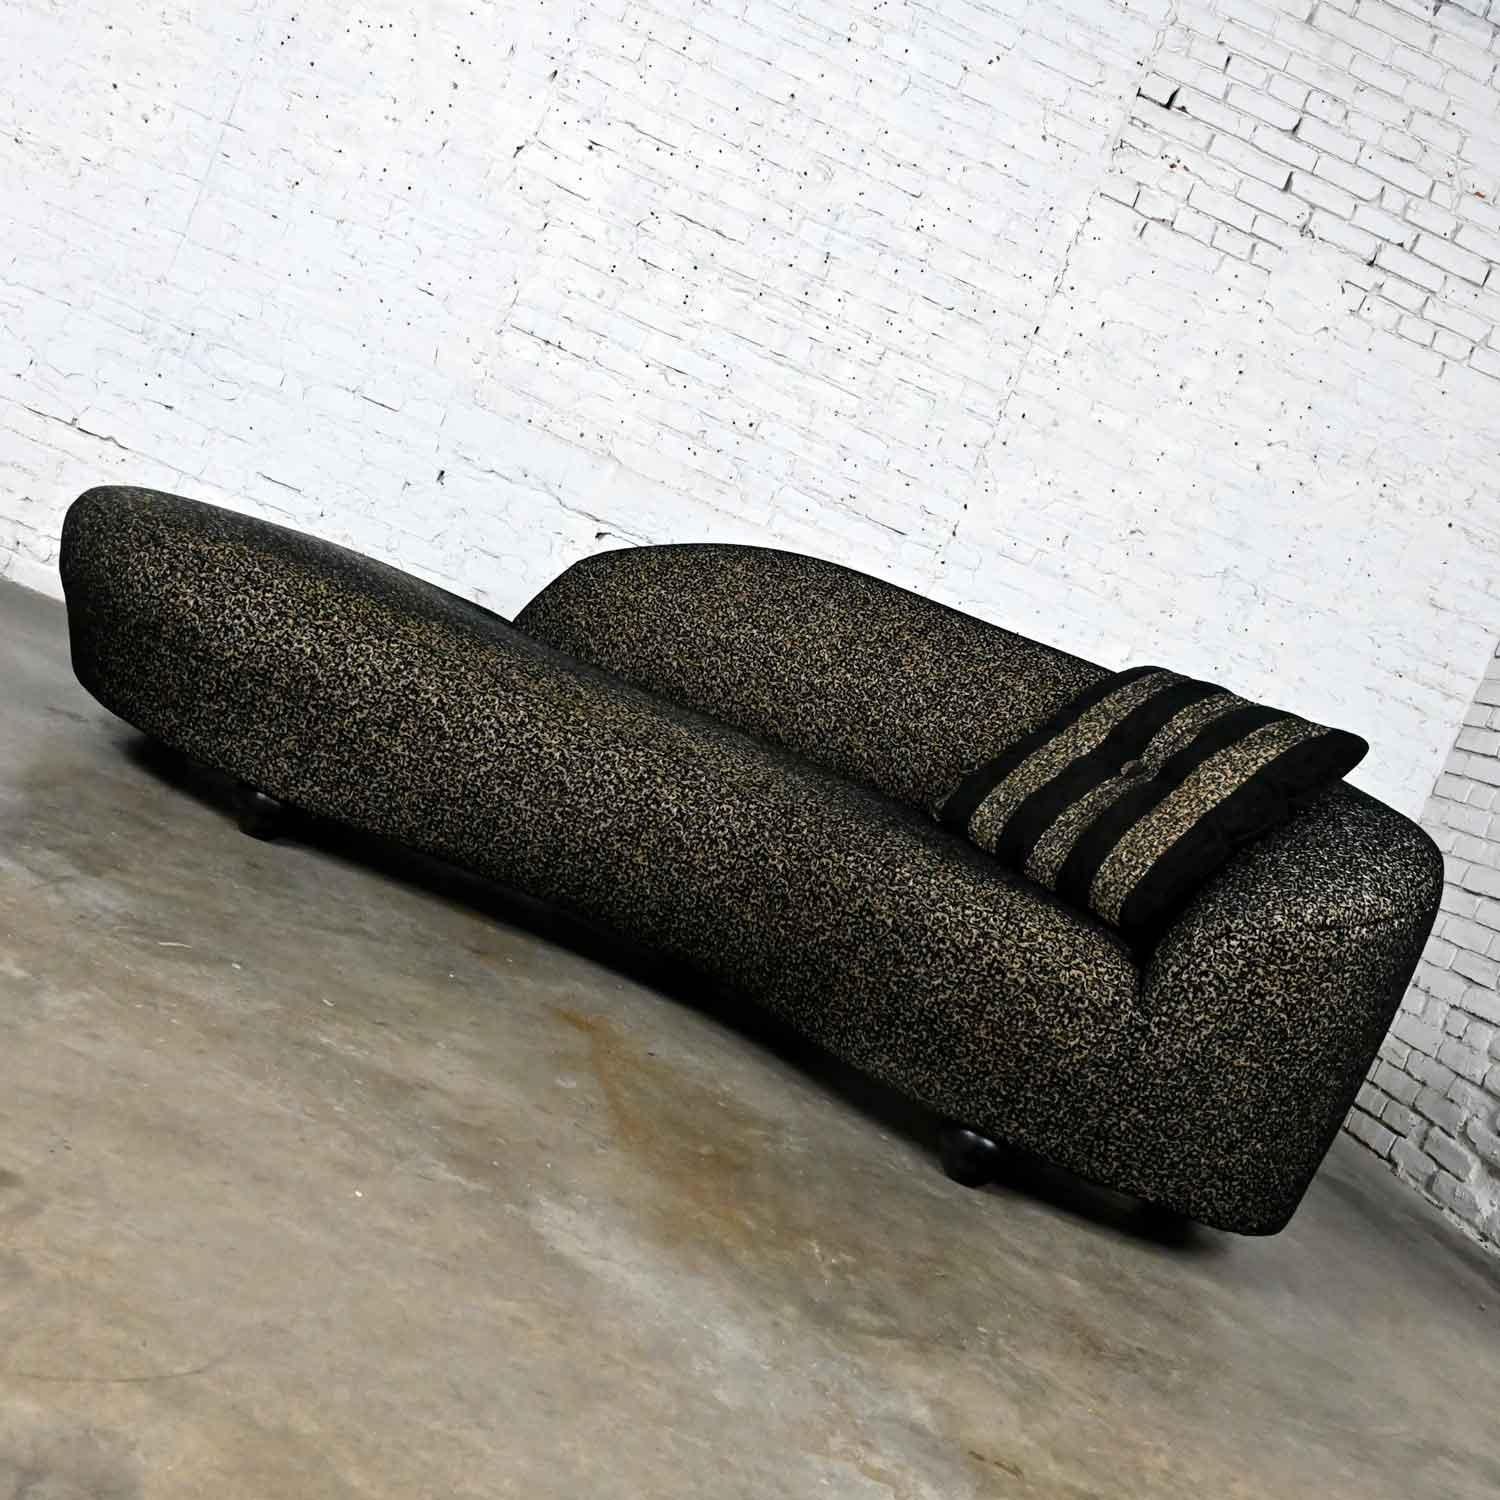 Postmodern Black & Khaki Sort of Animal Print Serpentine Cloud-Like Chaise Sofa For Sale 3